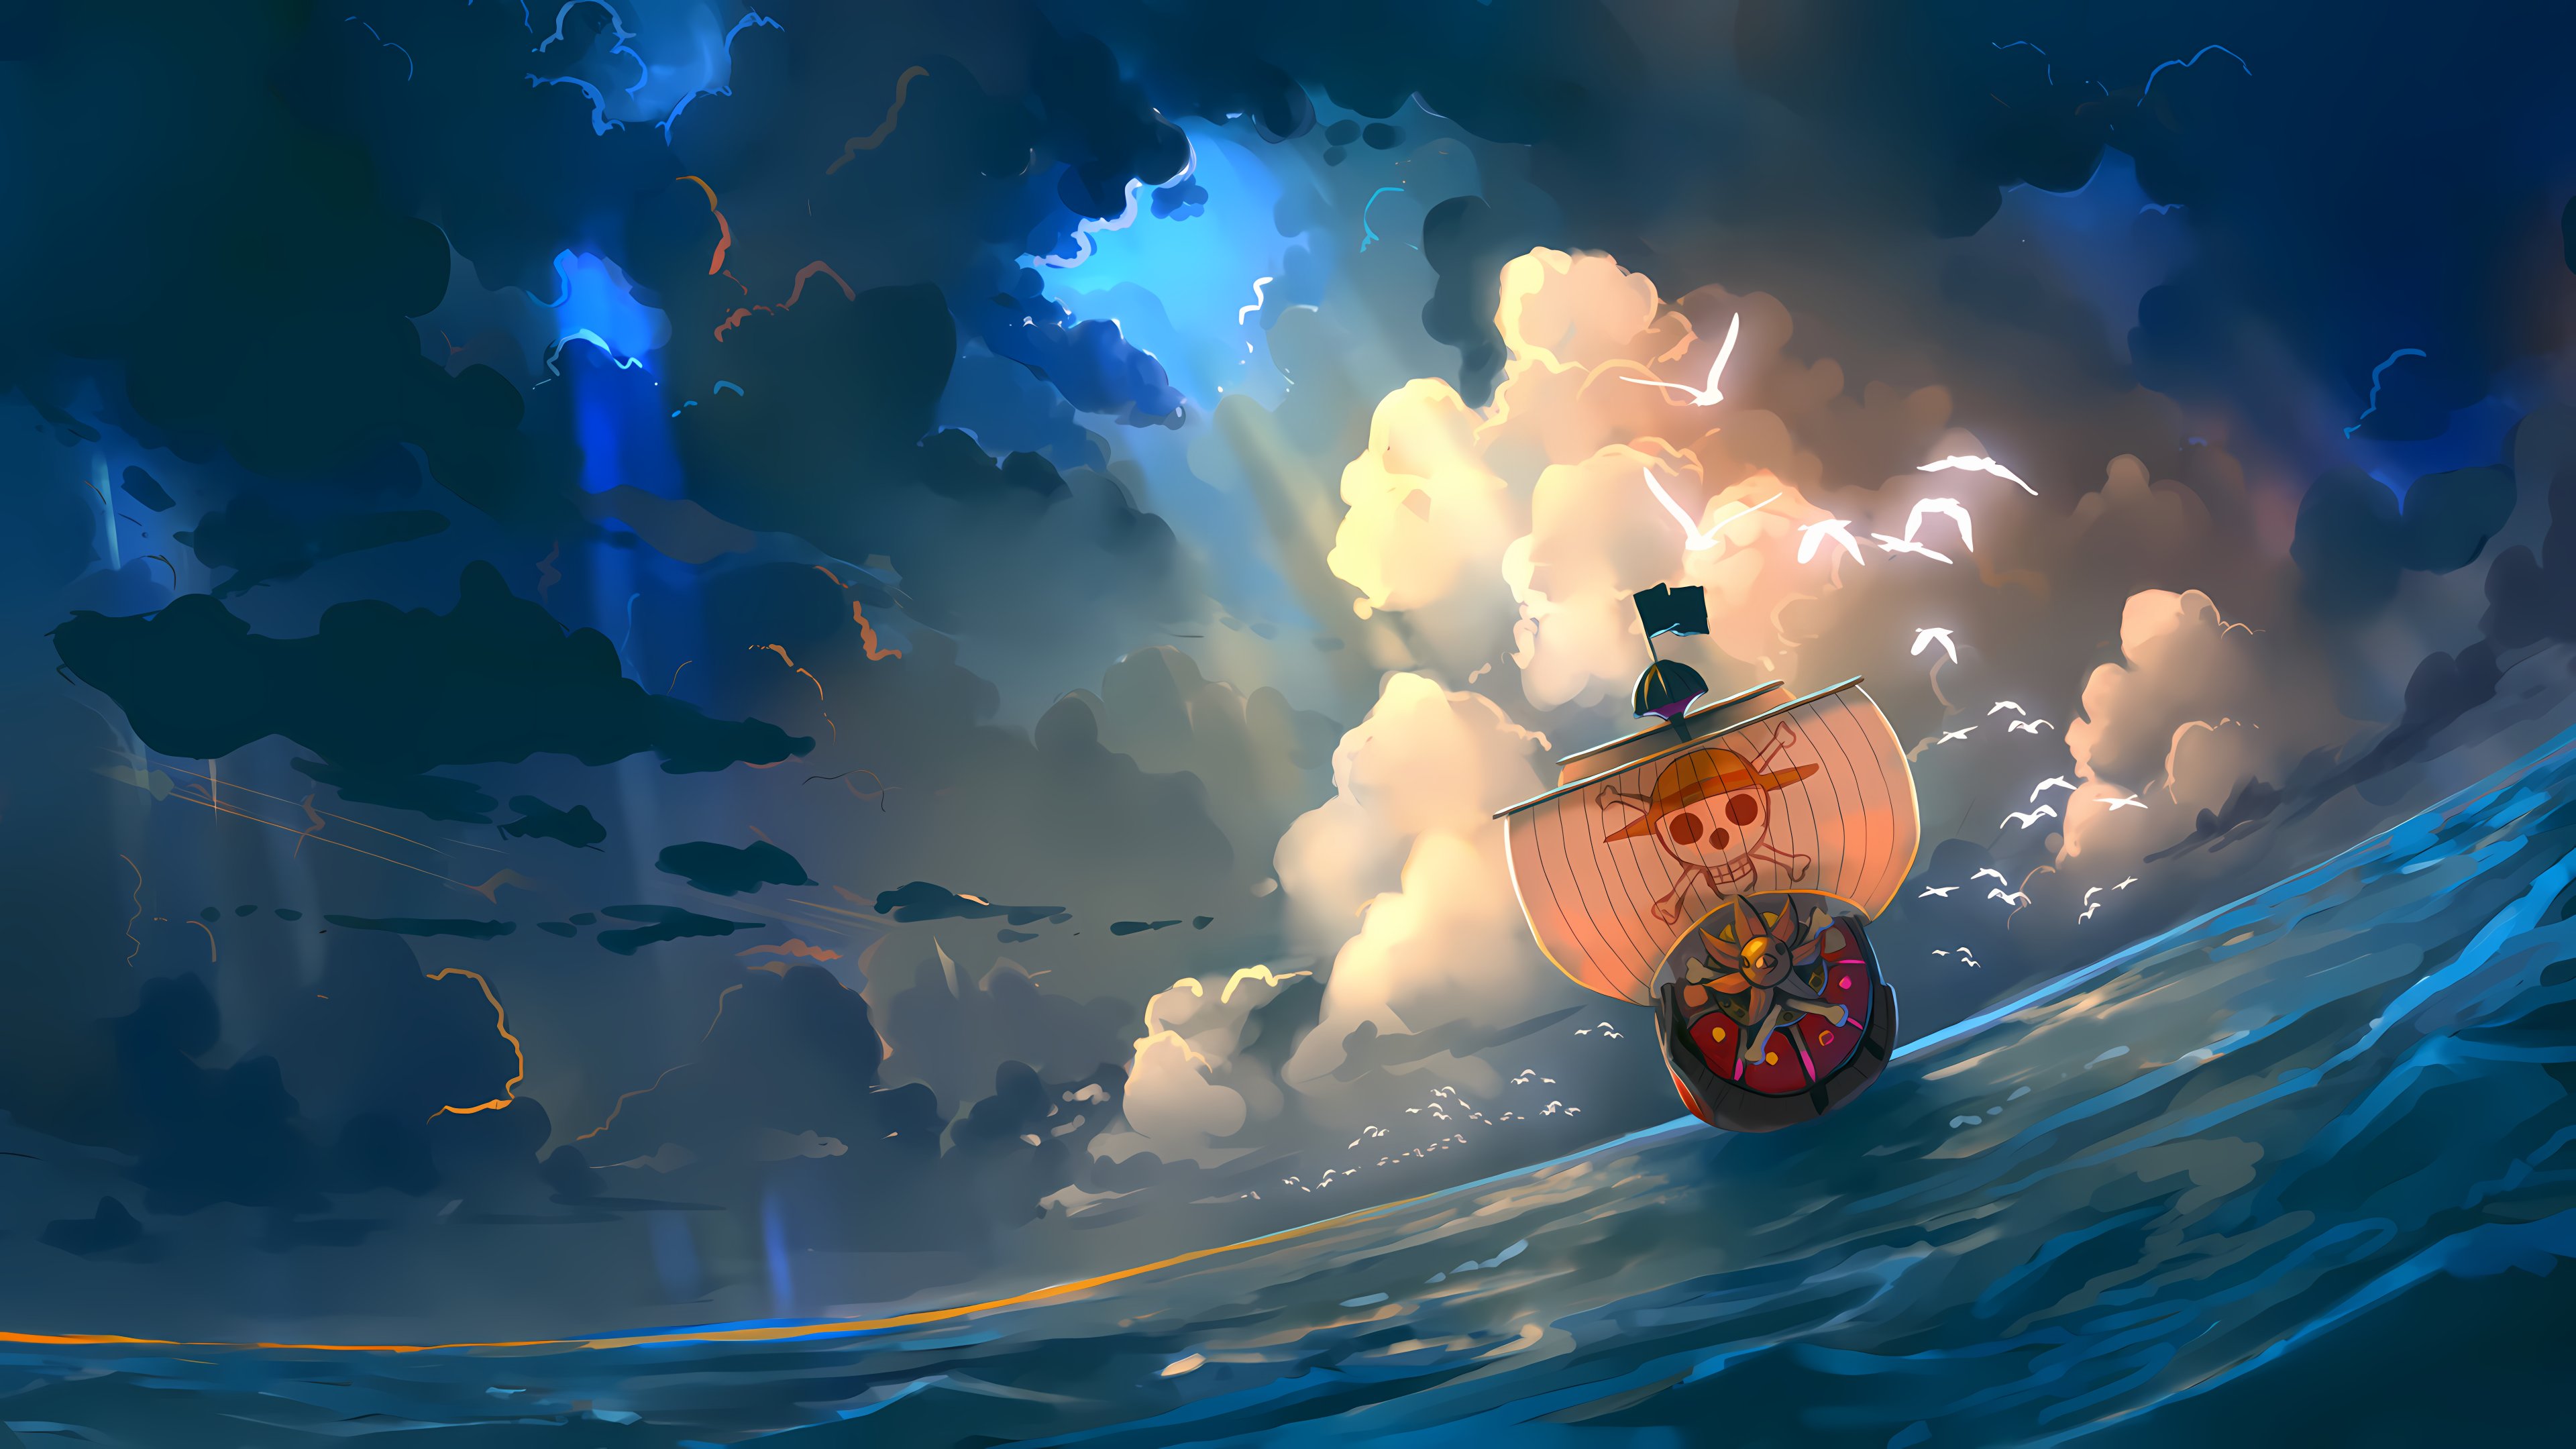 One Piece Pirate Ship Pirate Flag Clouds Sea Seagulls Digital Art Thousand Sunny 3840x2160